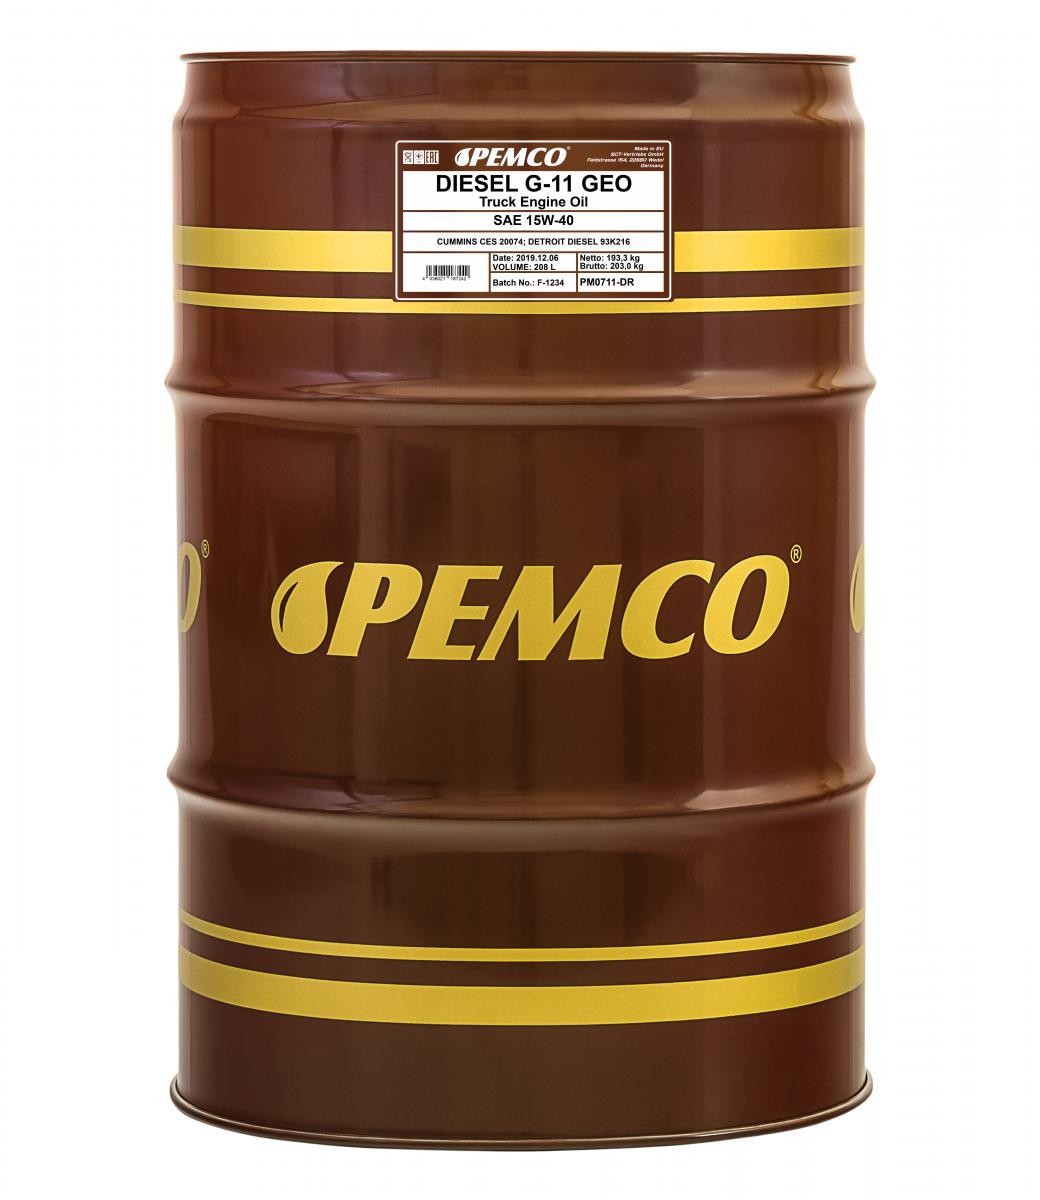 PEMCO Truck SHPD, DIESEL G-11 GEO PM0711-DR Engine oil 15W-40, 208l, Mineral Oil